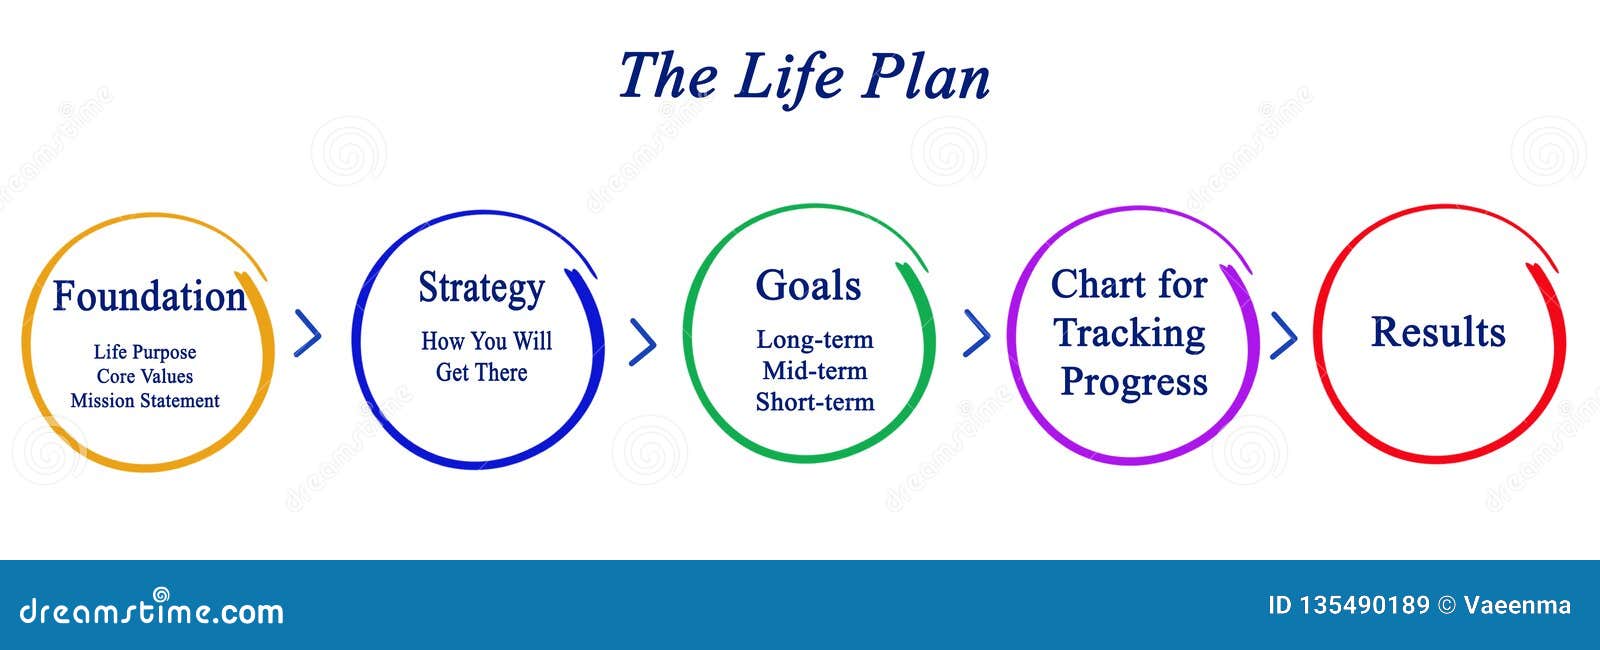 Life Plan Chart